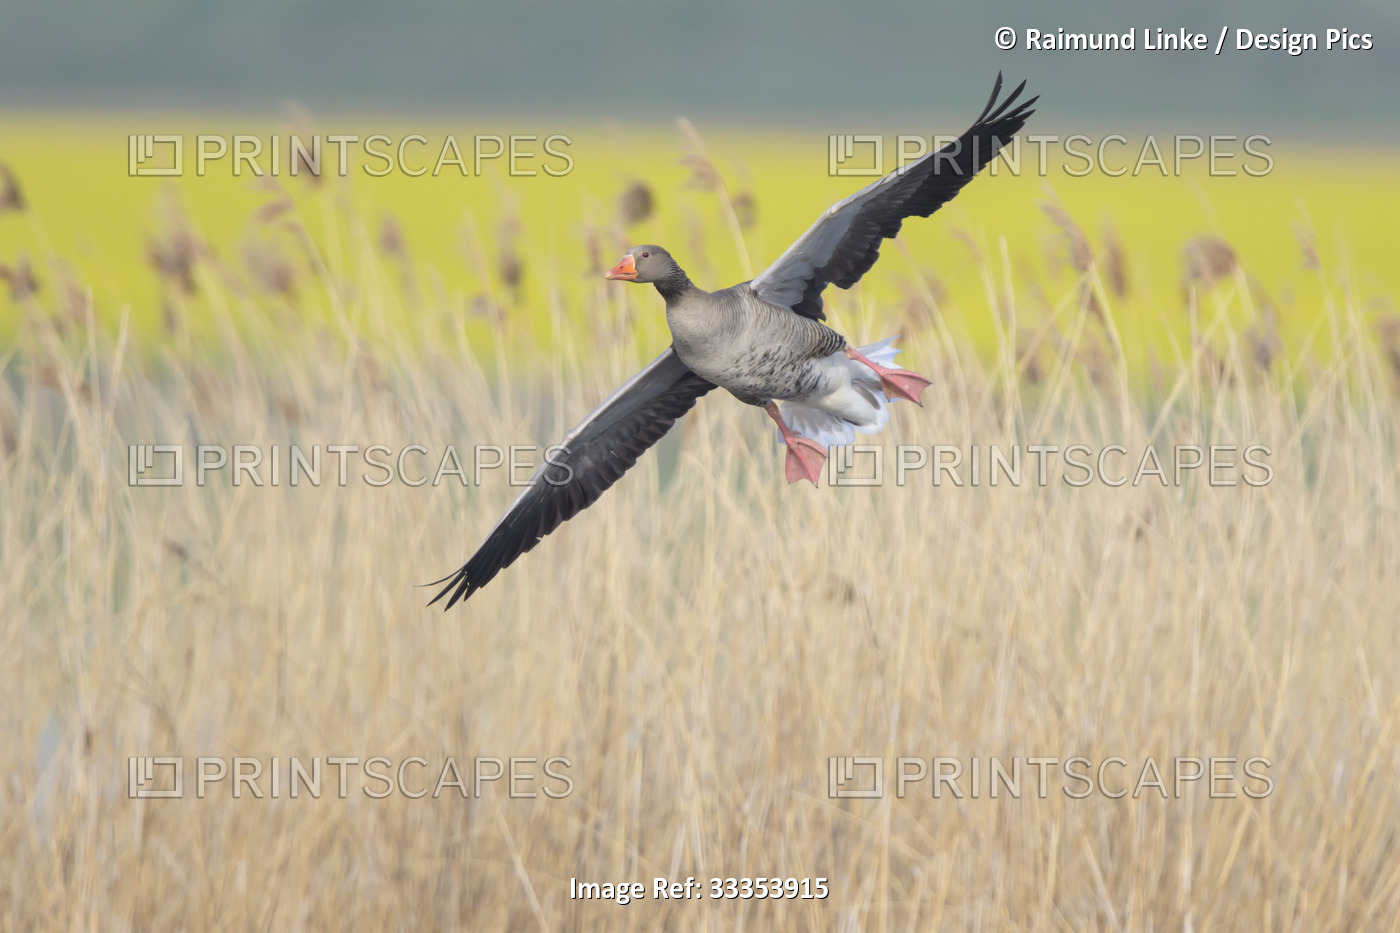 Greylag goose (Anser anser) in flight over a field of tall grass